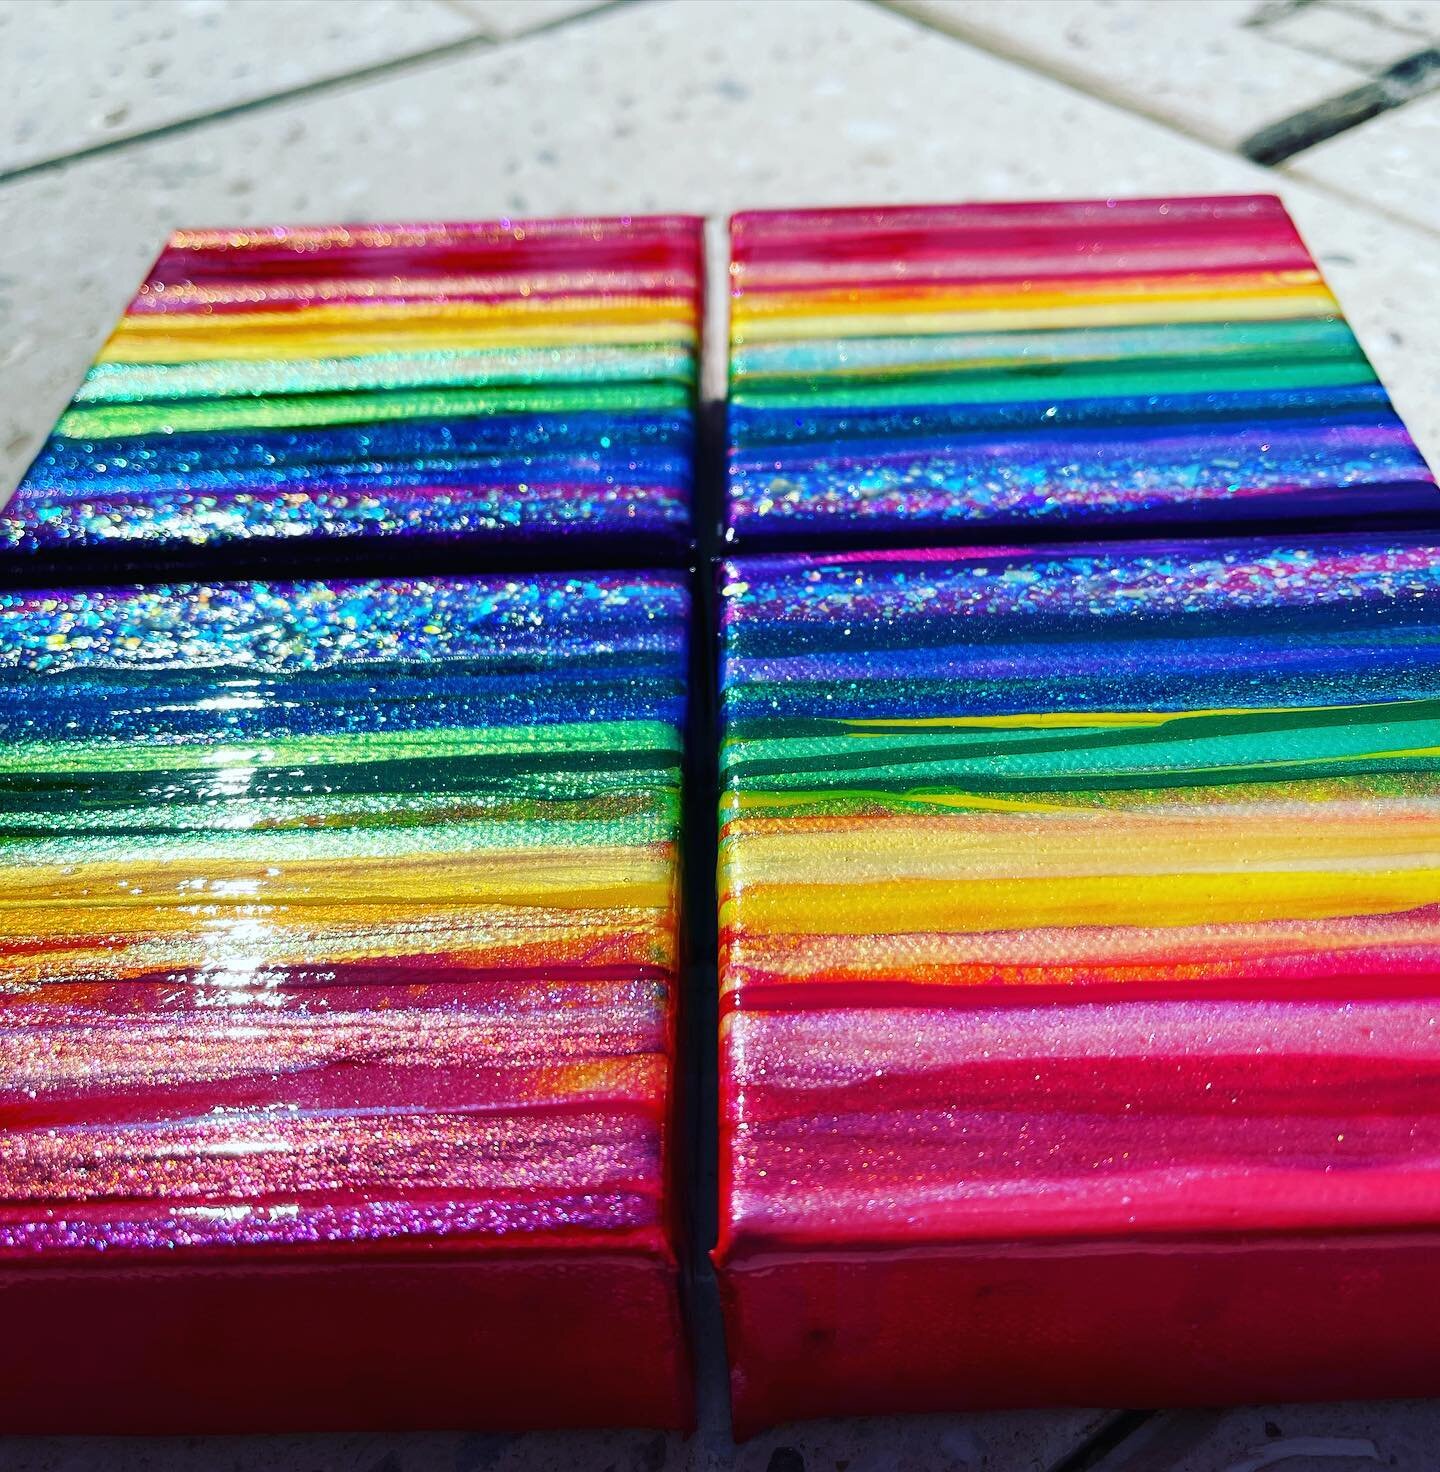 Such a vibrant 4 square!! 4x4s💥
💥
💥
💥
#azartist #azart #phxart #goldenpaints #dragonflyglaze #unicornspit #colorshiftpaint #glitter #rainbow #artstudio #artistoninstagram #art #lifeisbetterwithart  #Iridescent #Iridescence #opalart #sparkleismyfa